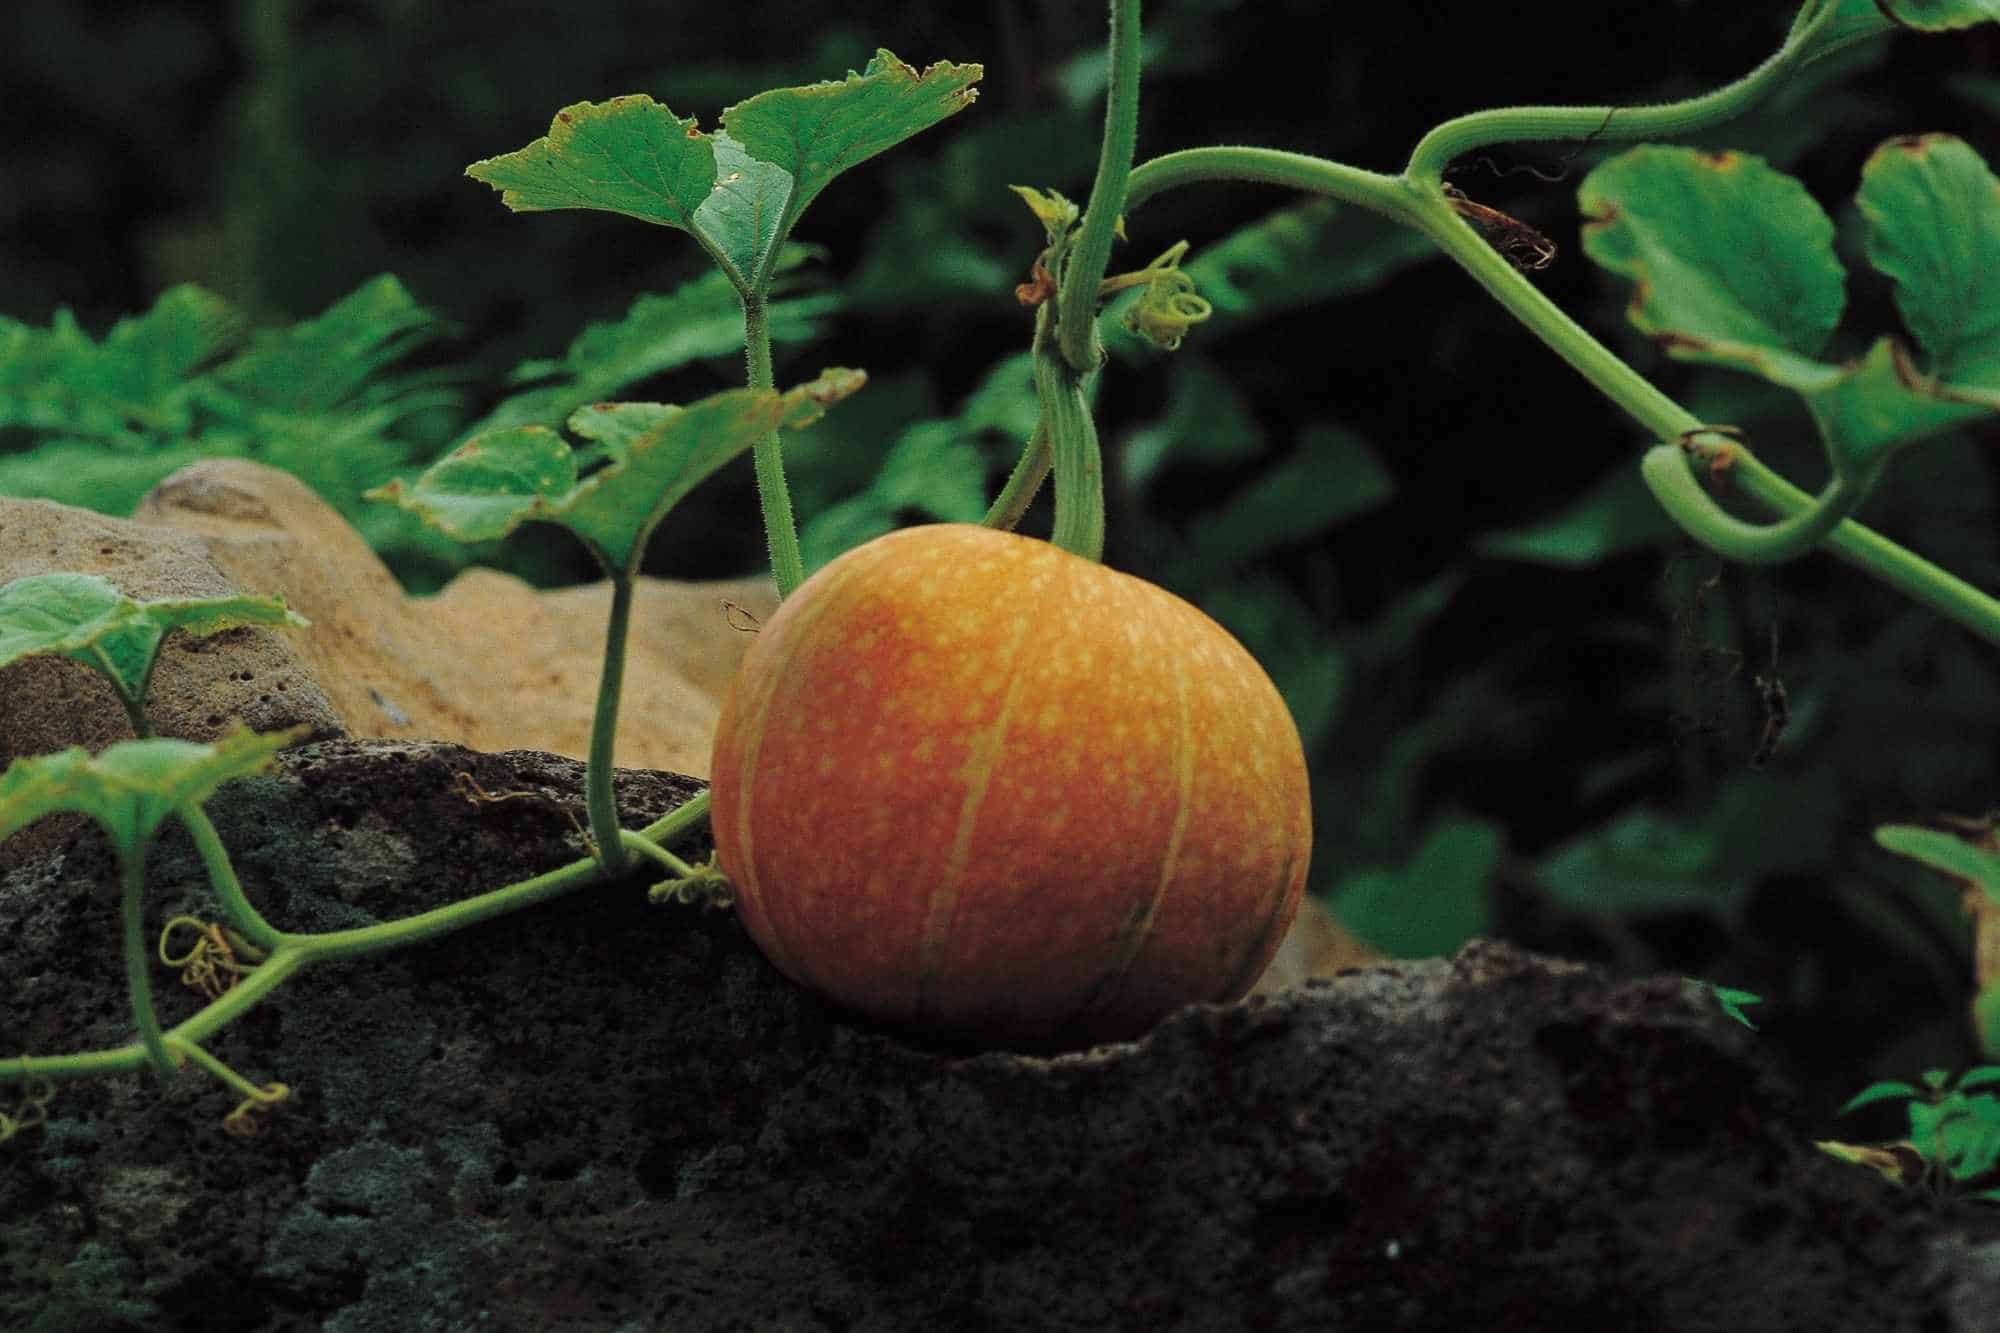 An orange pumpkin ripened on the vine.